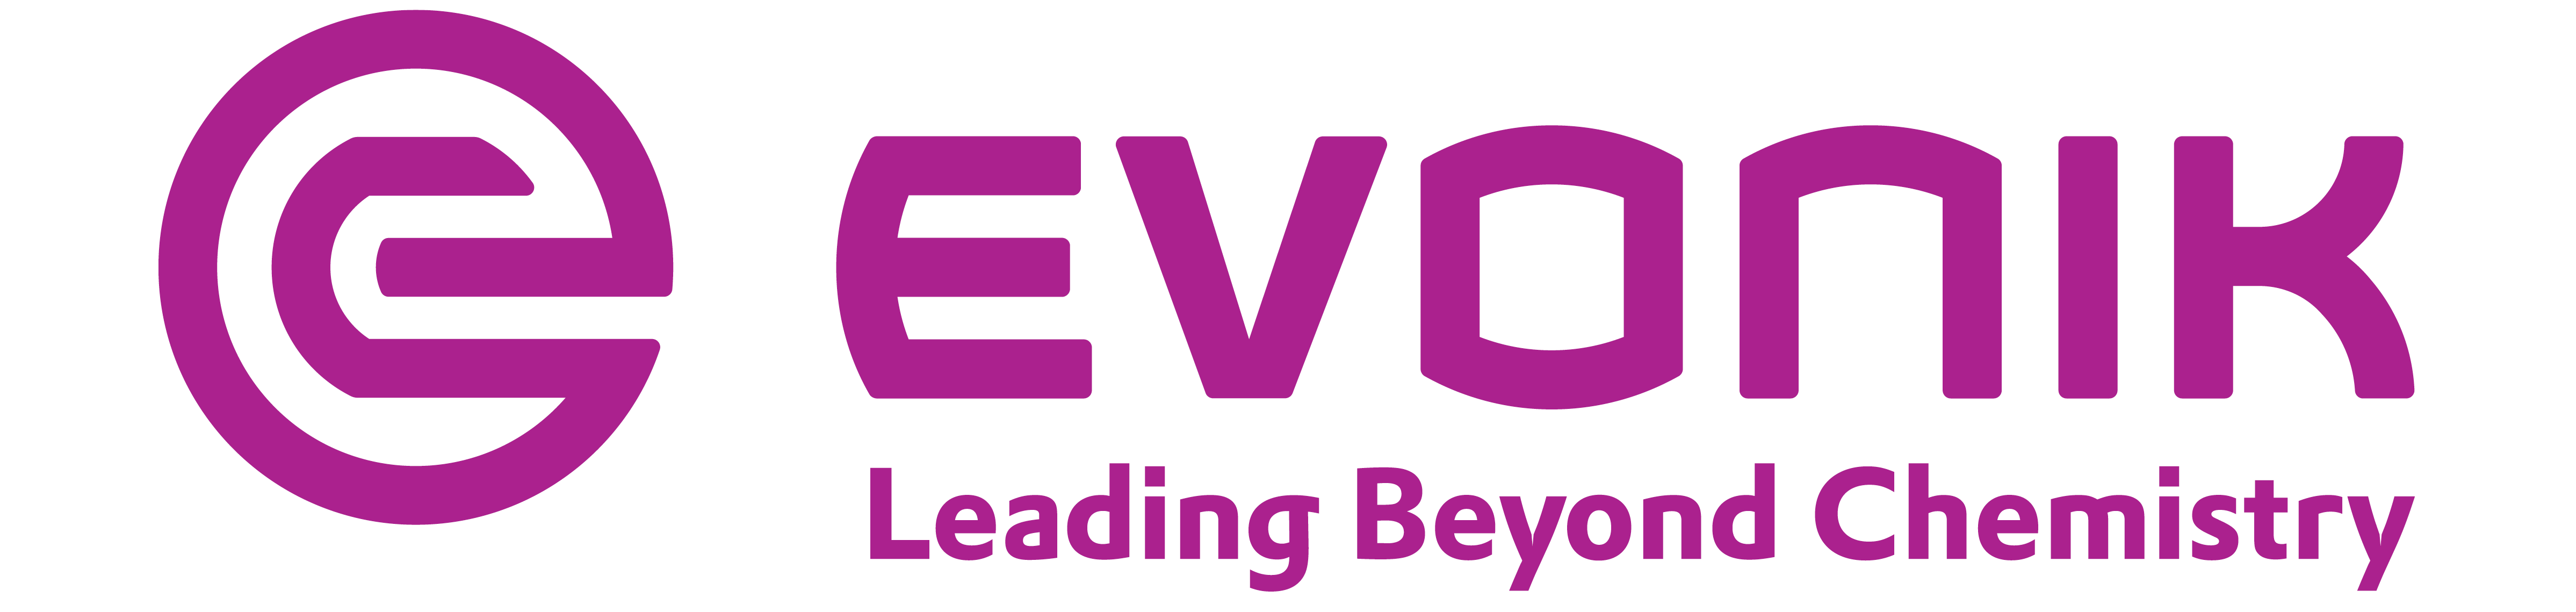 Evonik logo with tagline "leading beyond chemistry"